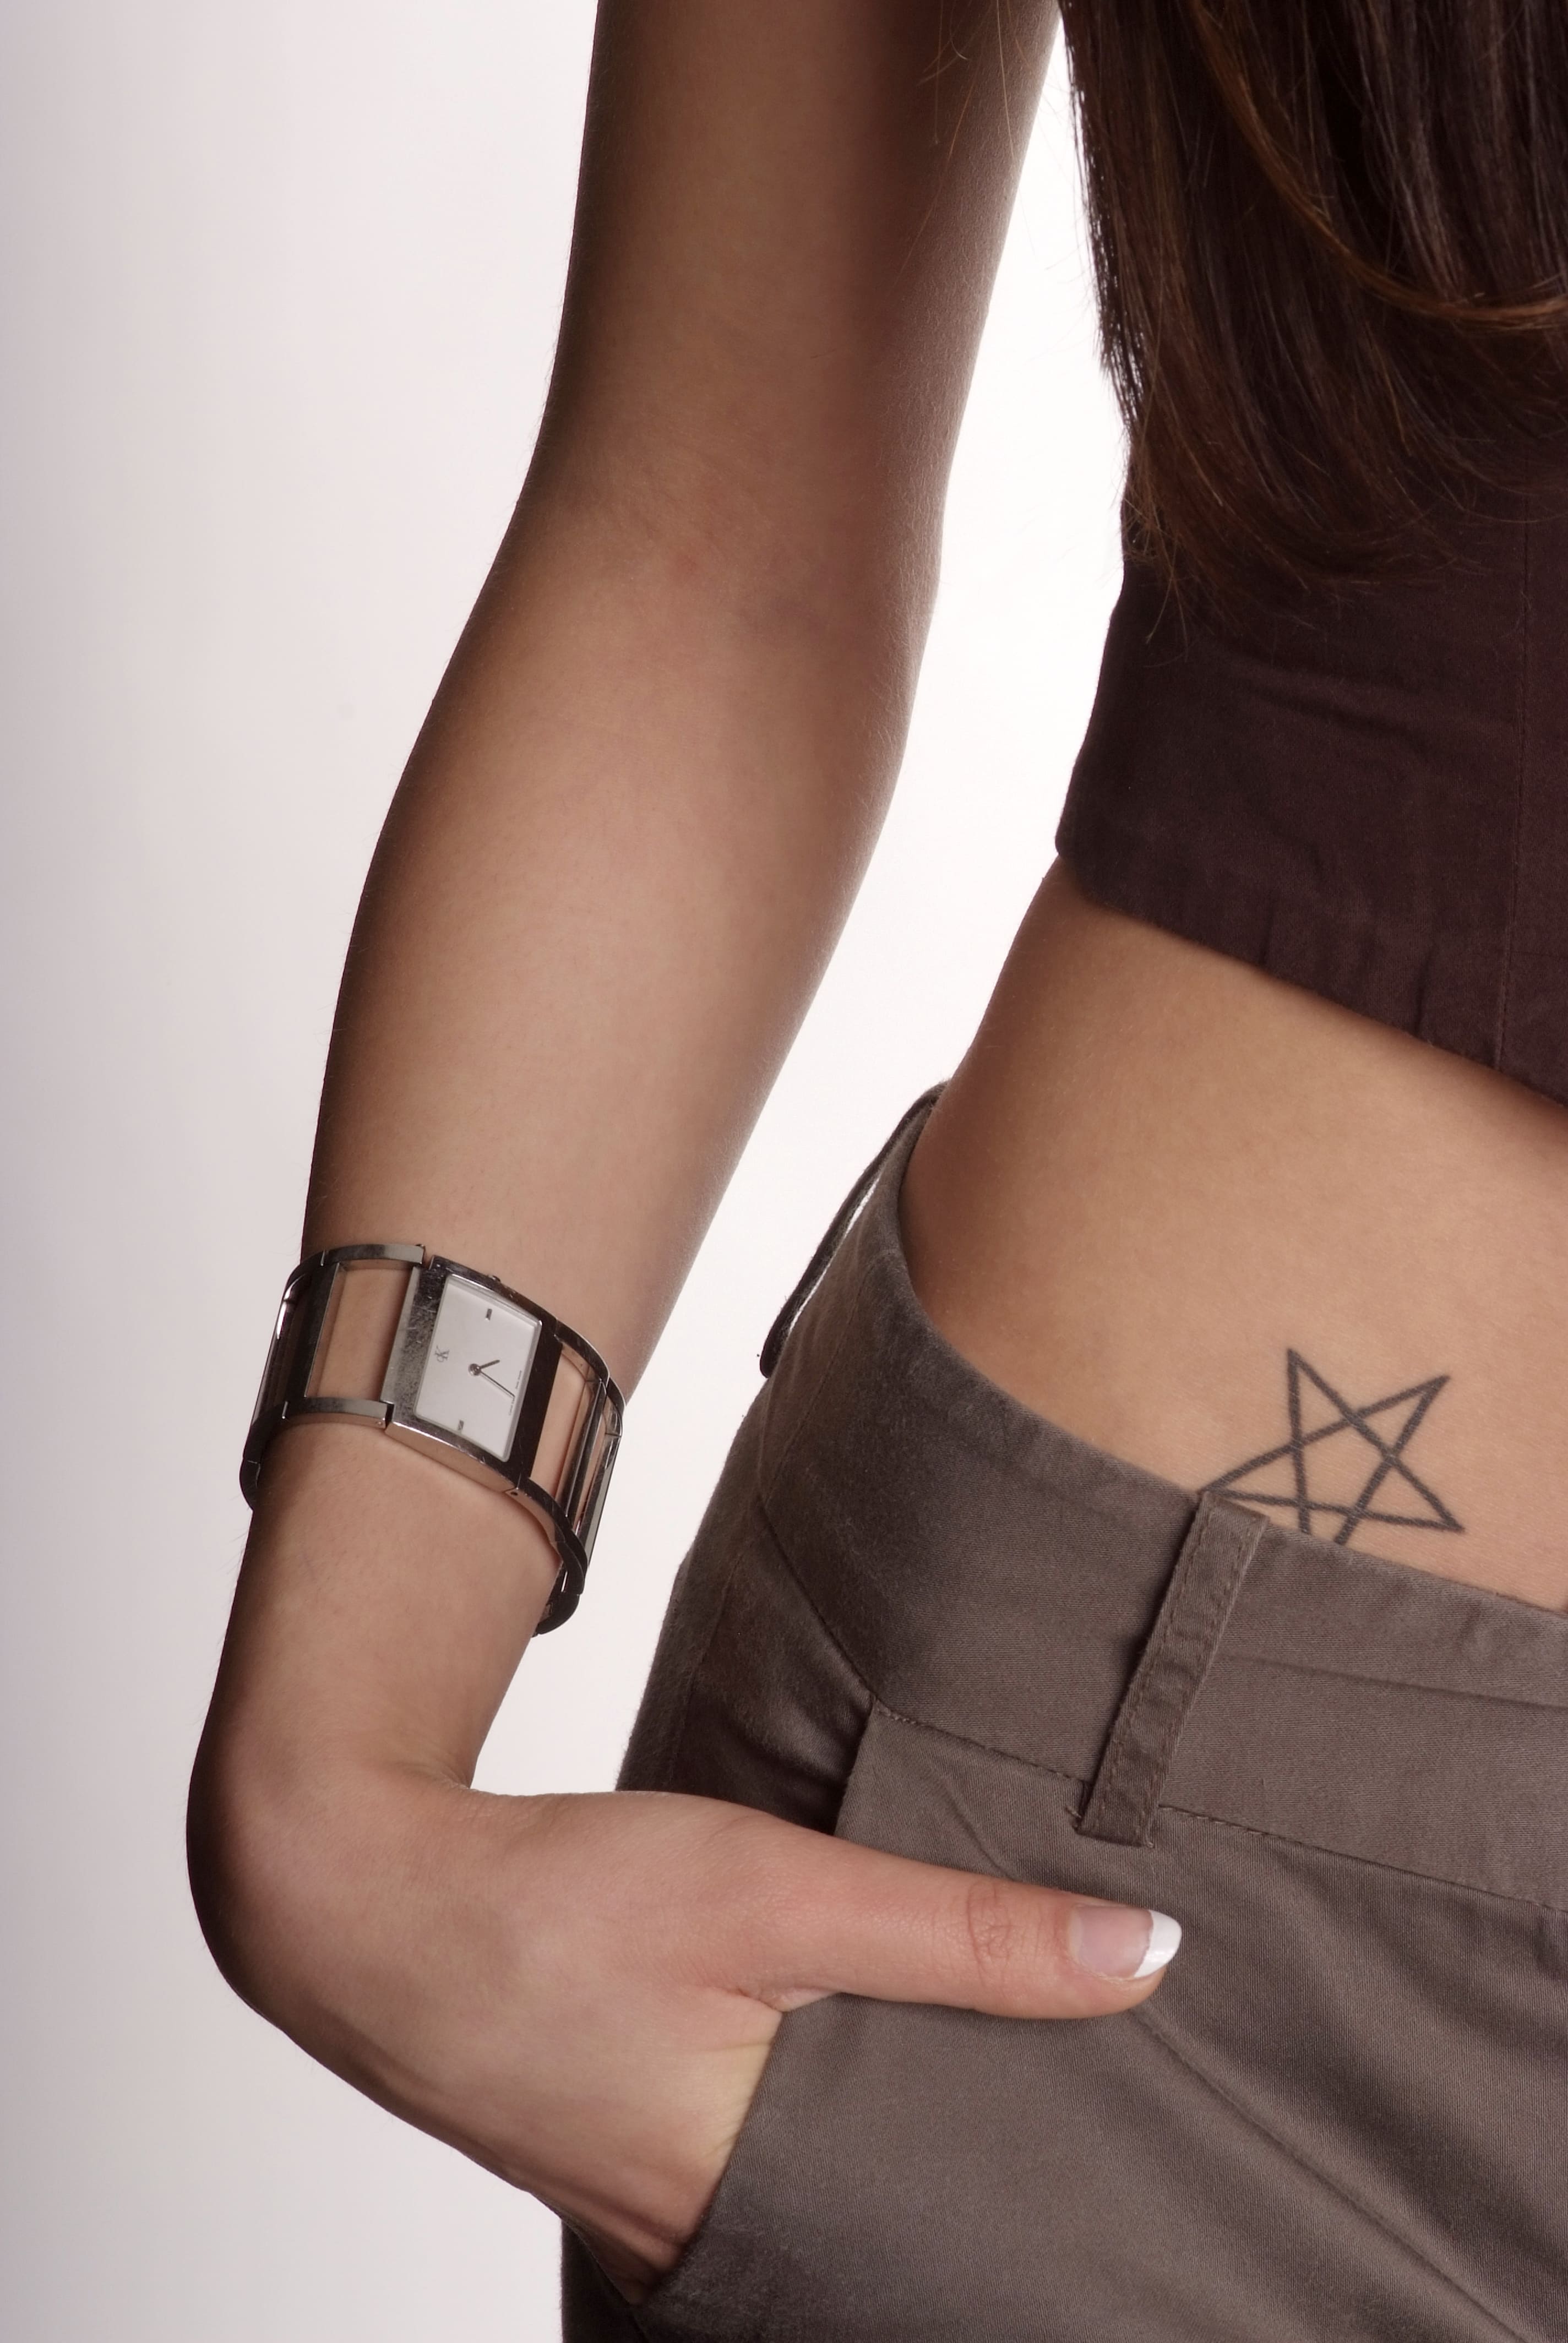 Tattoo Design Ideas for Girls - 14